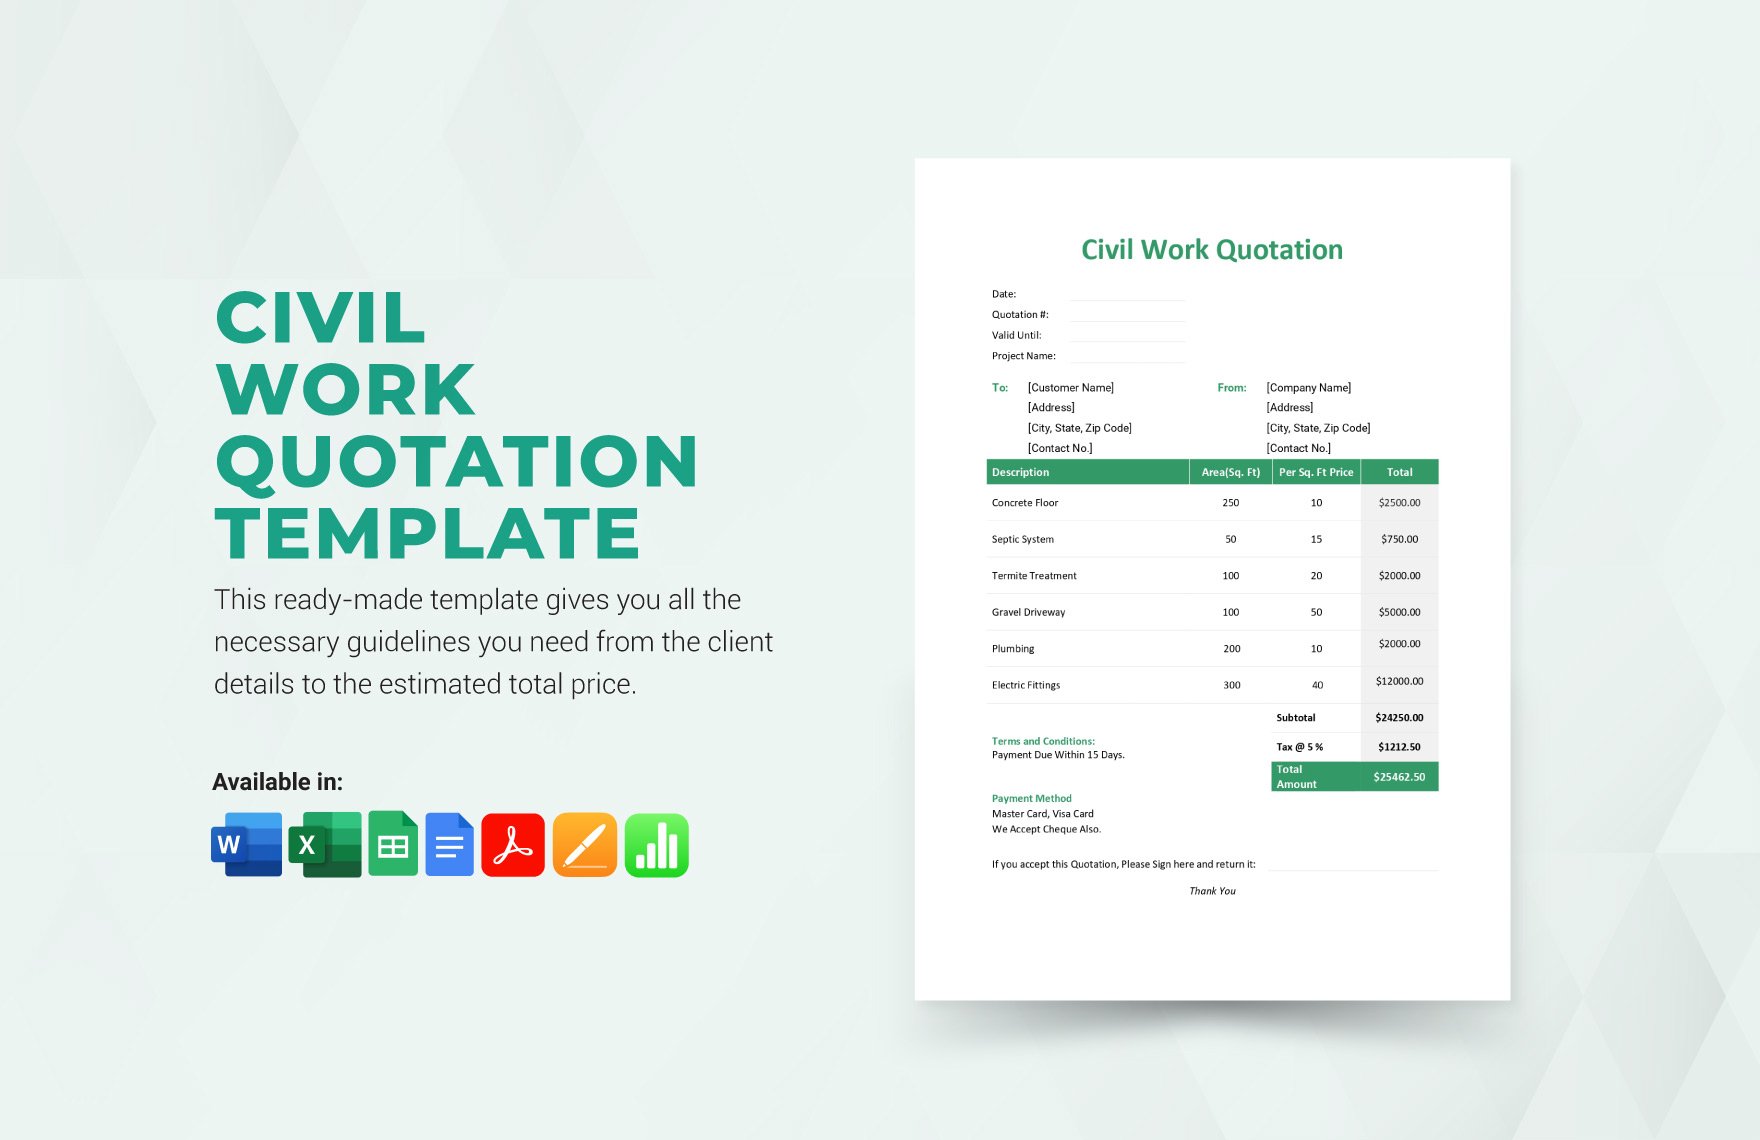 Civil Work Quotation Template